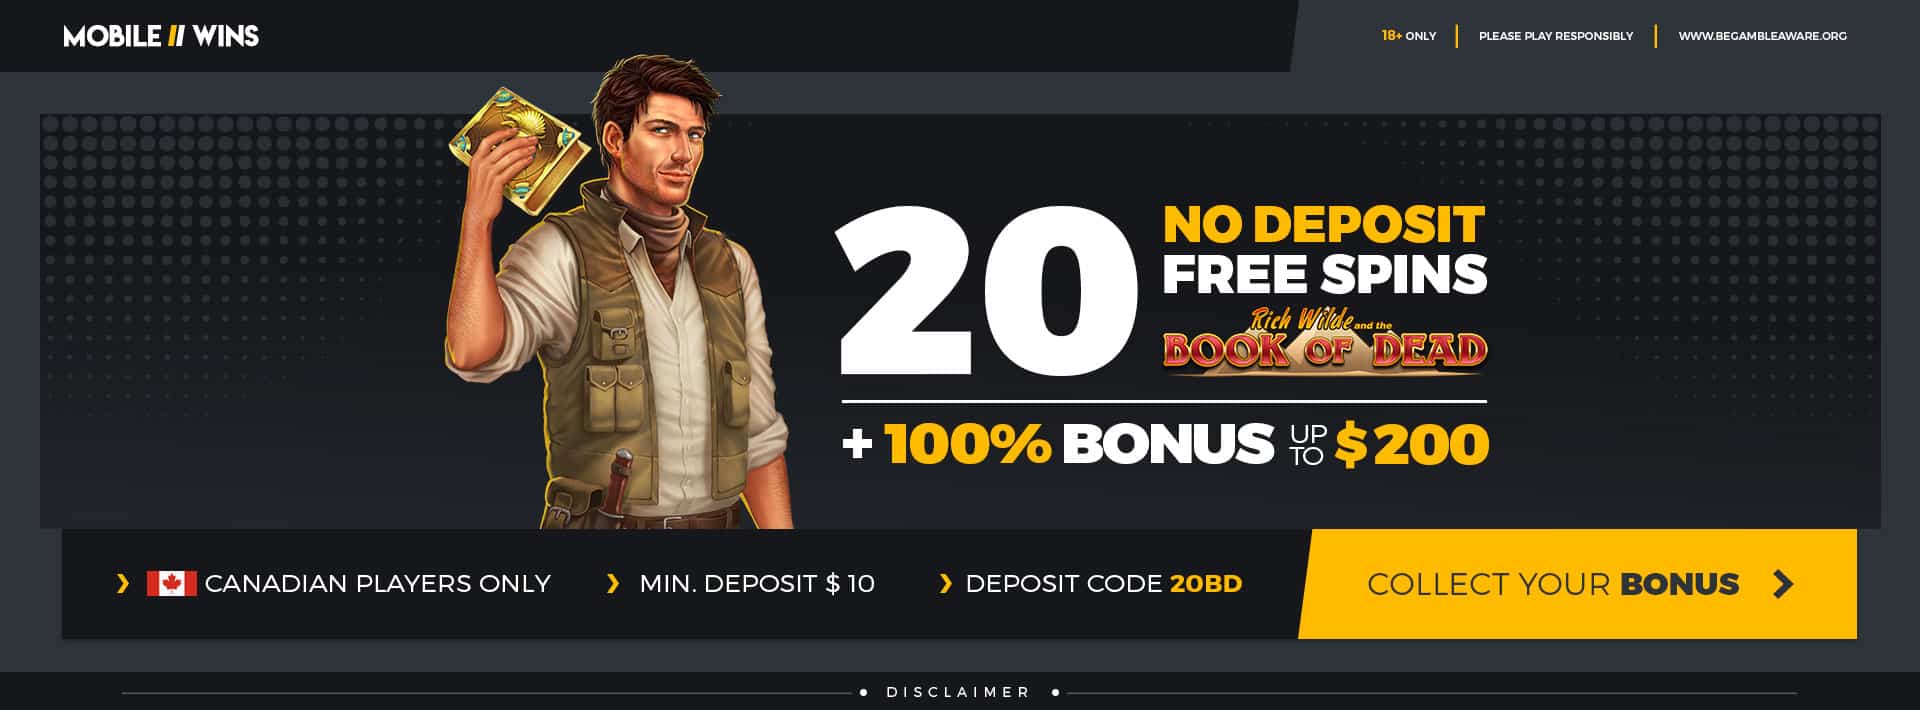 20 No Deposit Free Spins + $200 Bonus | Mobile Wins Casino